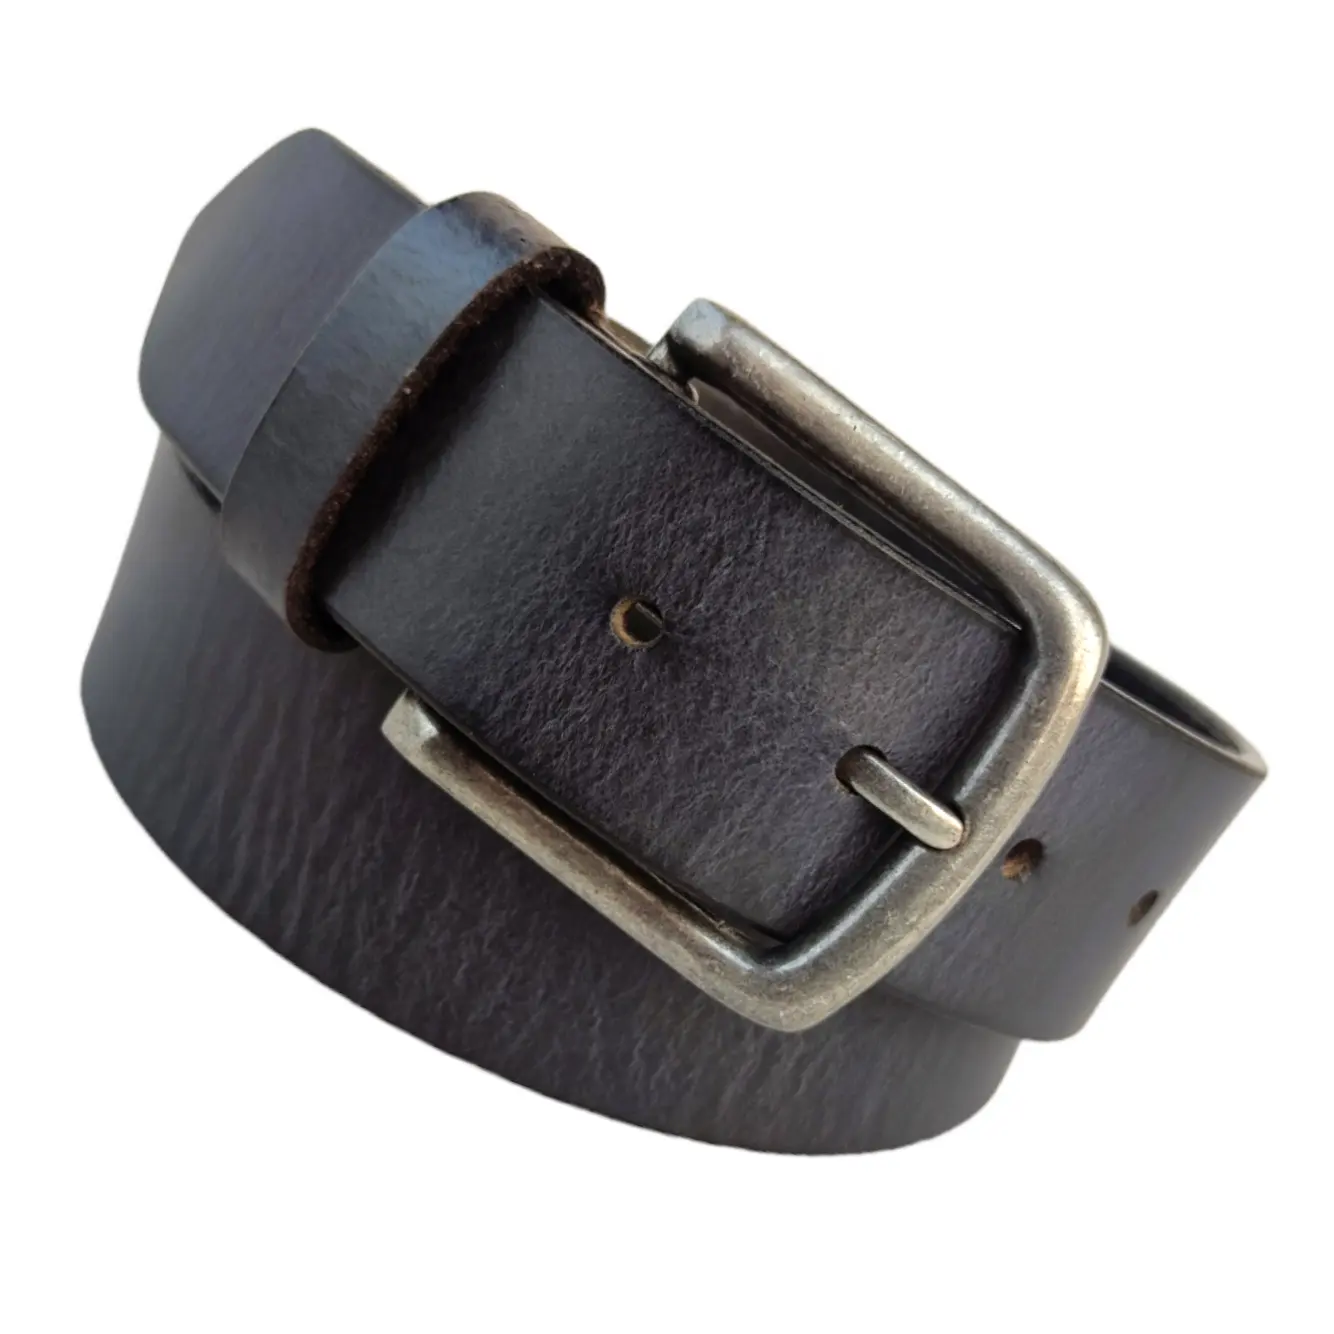 Black vintage 40mm Amazon hot sale wholesale leather belt Strap for men with vintage buckle for jeans and casual wear belt